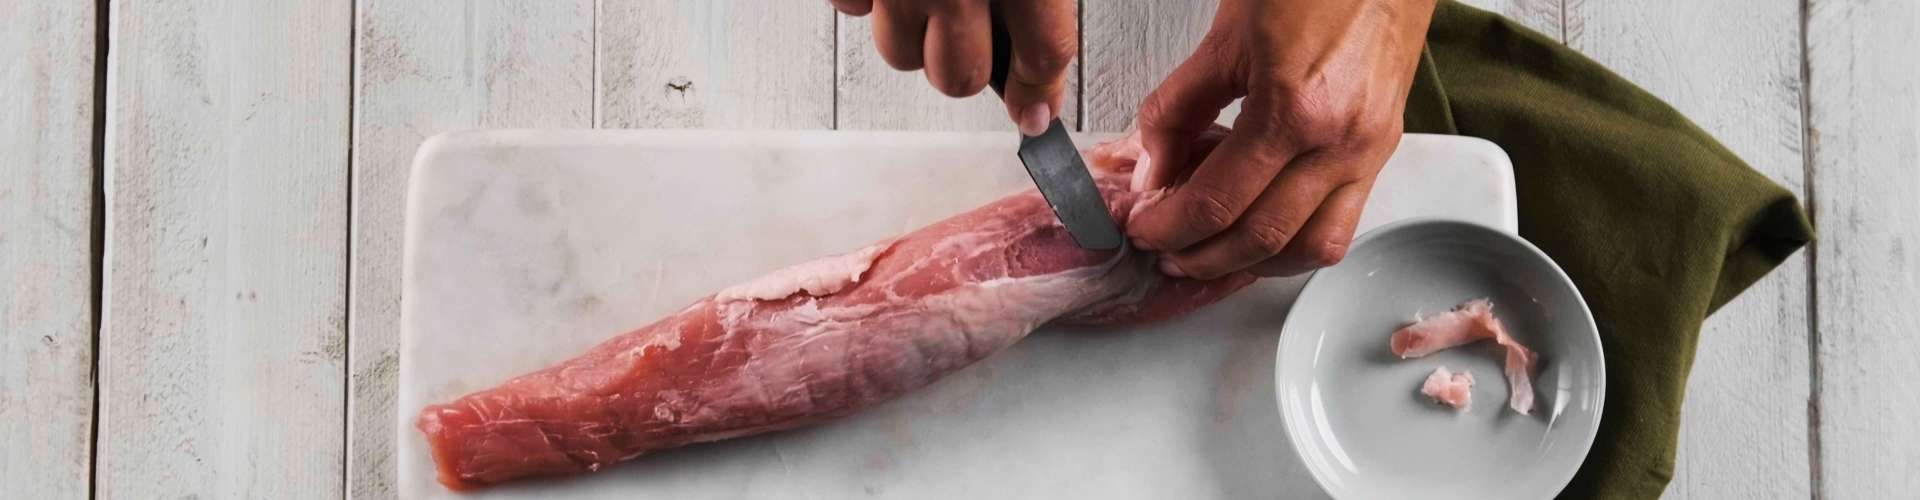 Removing the silver skin from a pork tenderloin